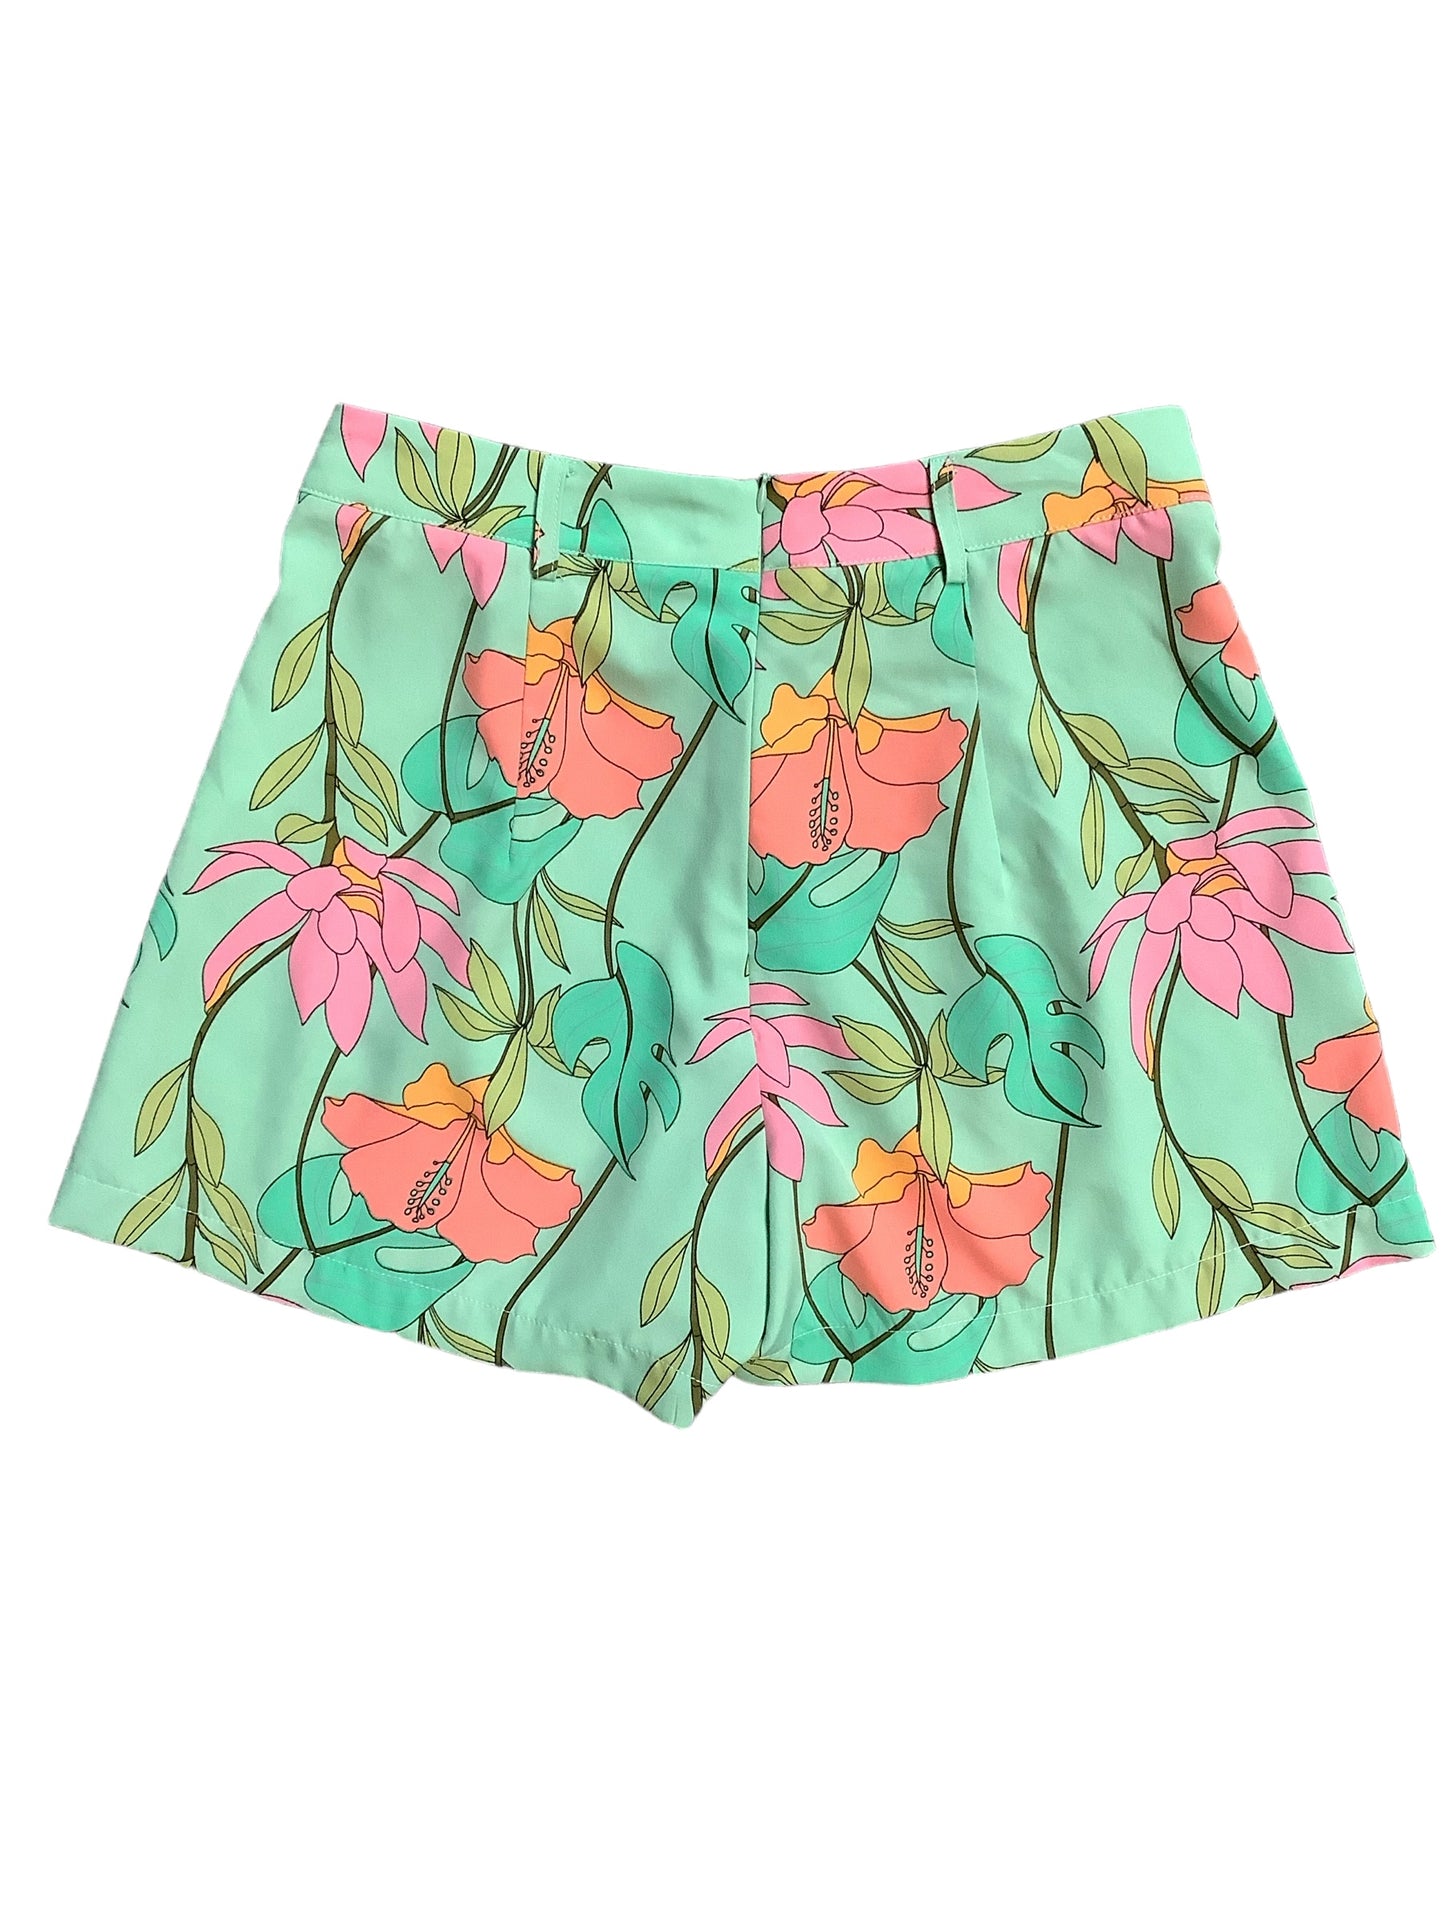 Shorts By Molly Bracken  Size: S